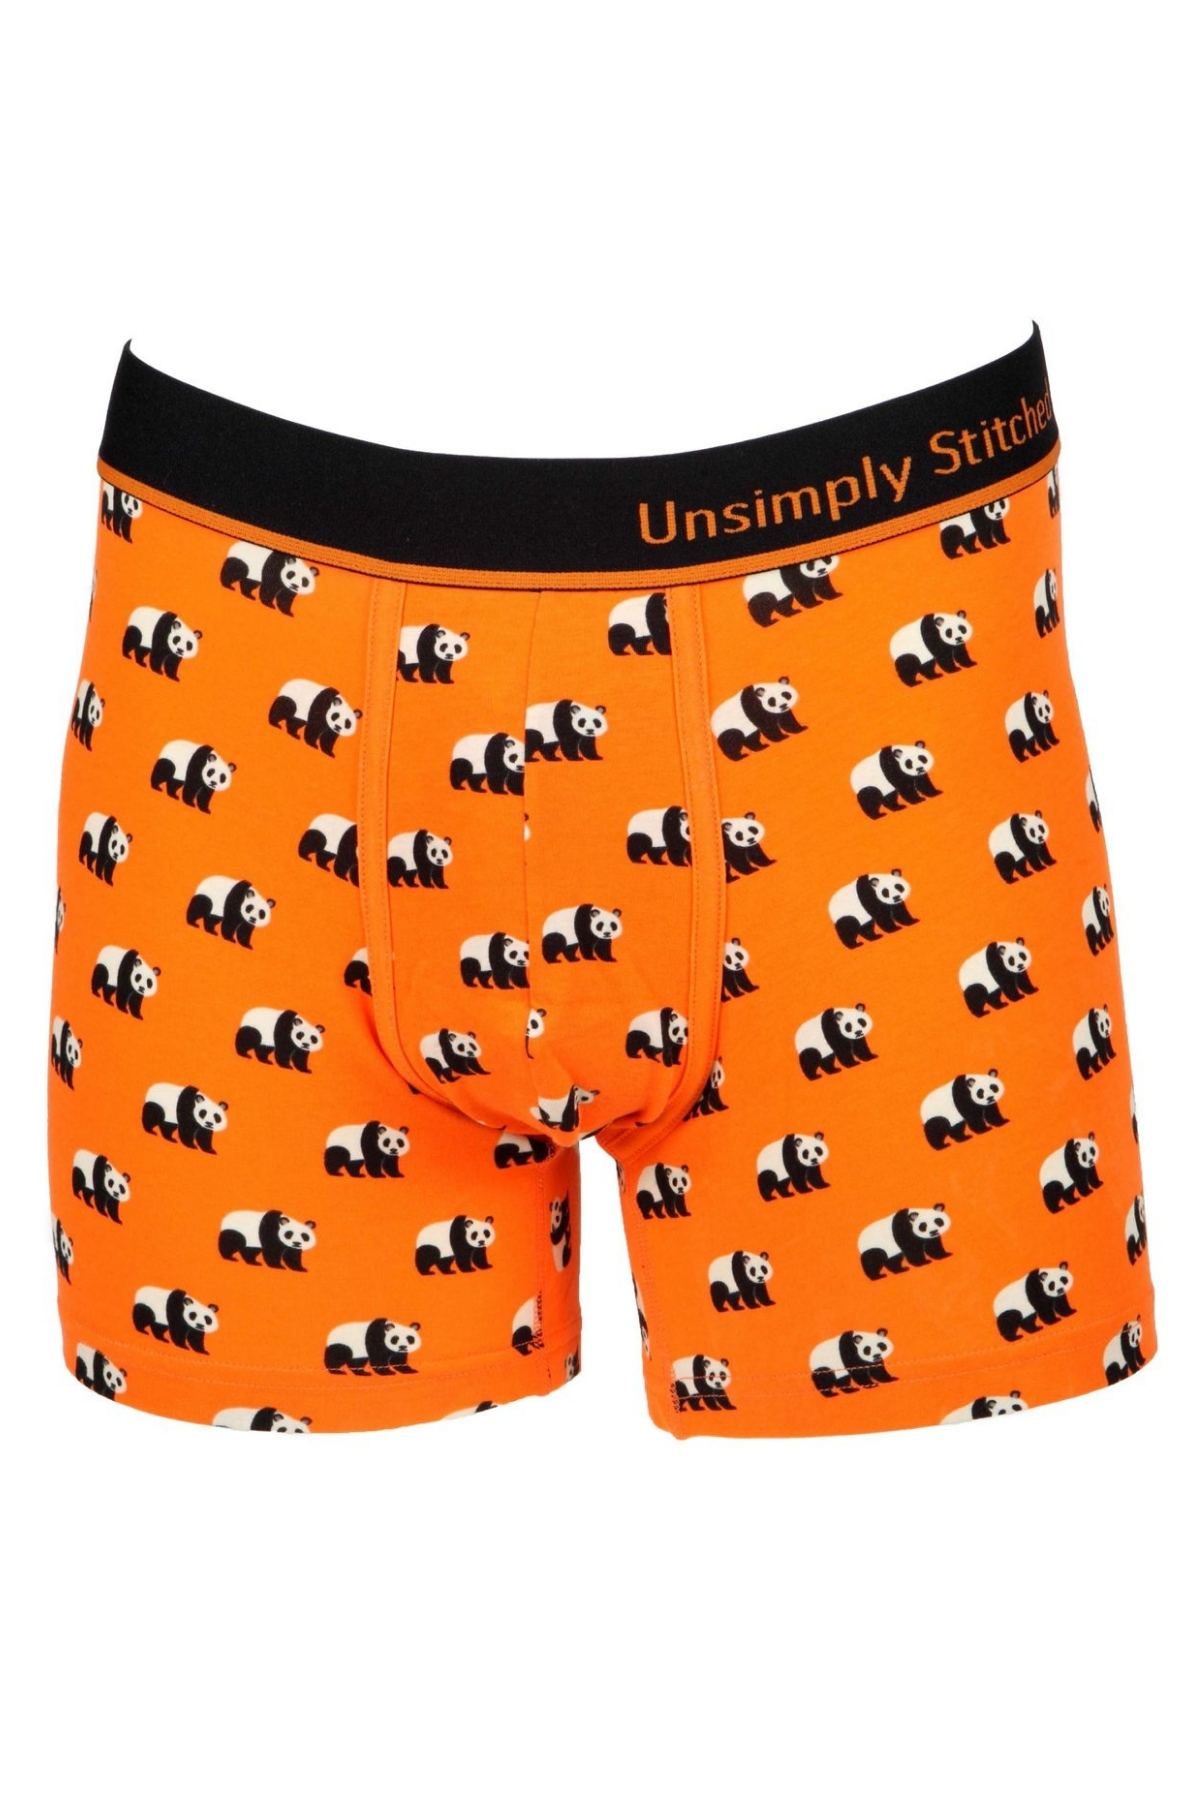 Unsimply Stitched Orange Panda Boxer Brief